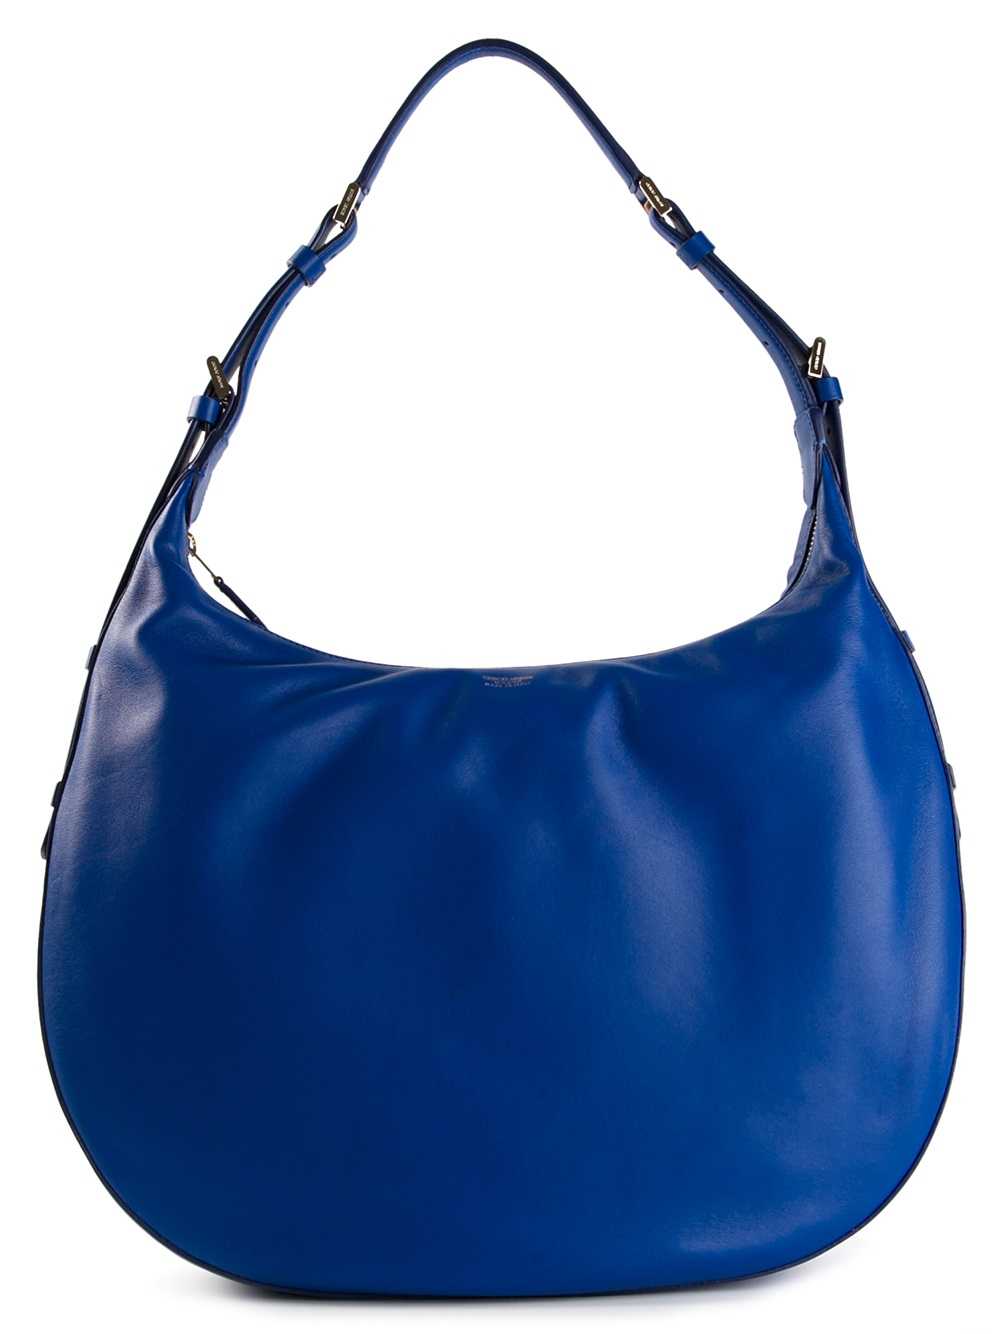 Lyst - Giorgio Armani Hobo Bag in Blue